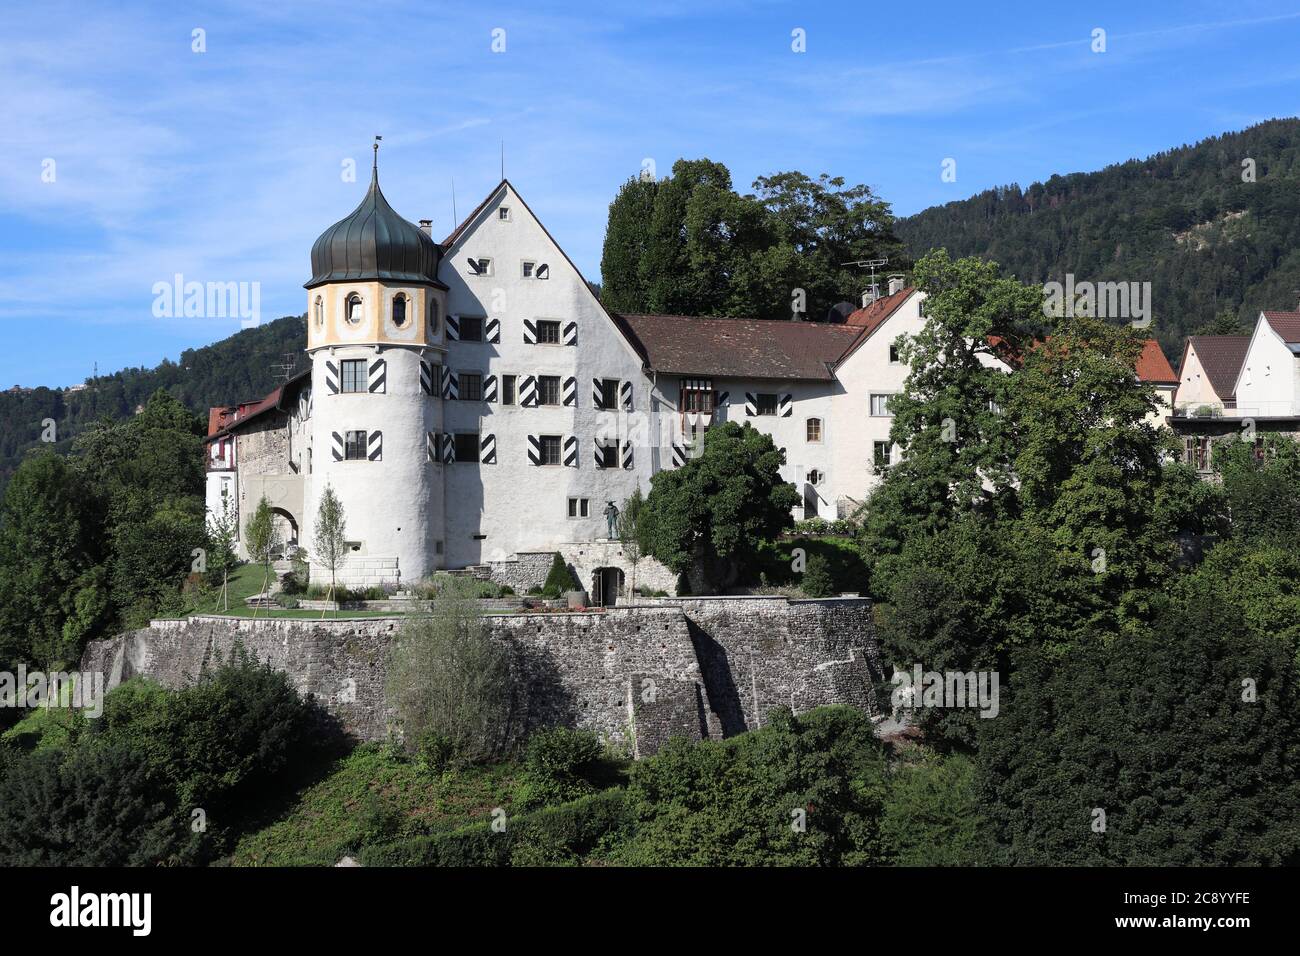 Bregenz, / Austria - August 09 2019: Deuring castle located in the upper town area of Bregenz, Austria Stock Photo